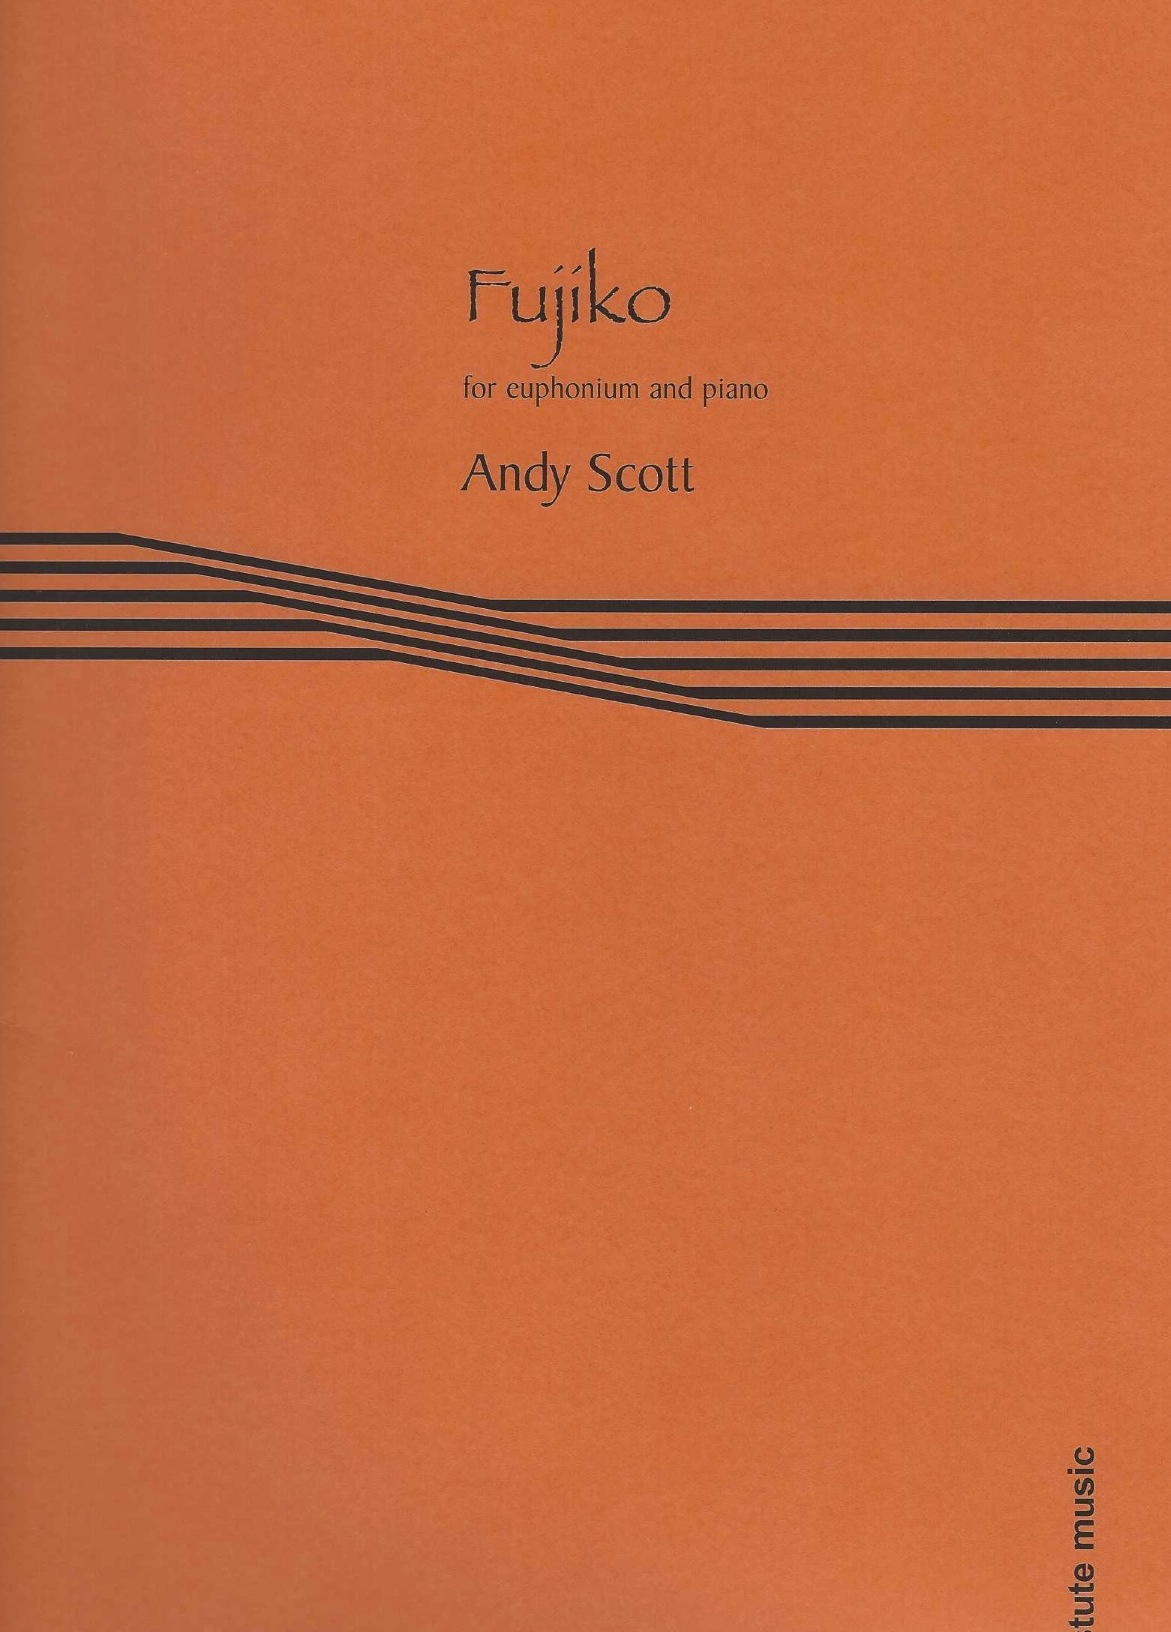 Fujiko - Andy Scott   Euphonium and Piano